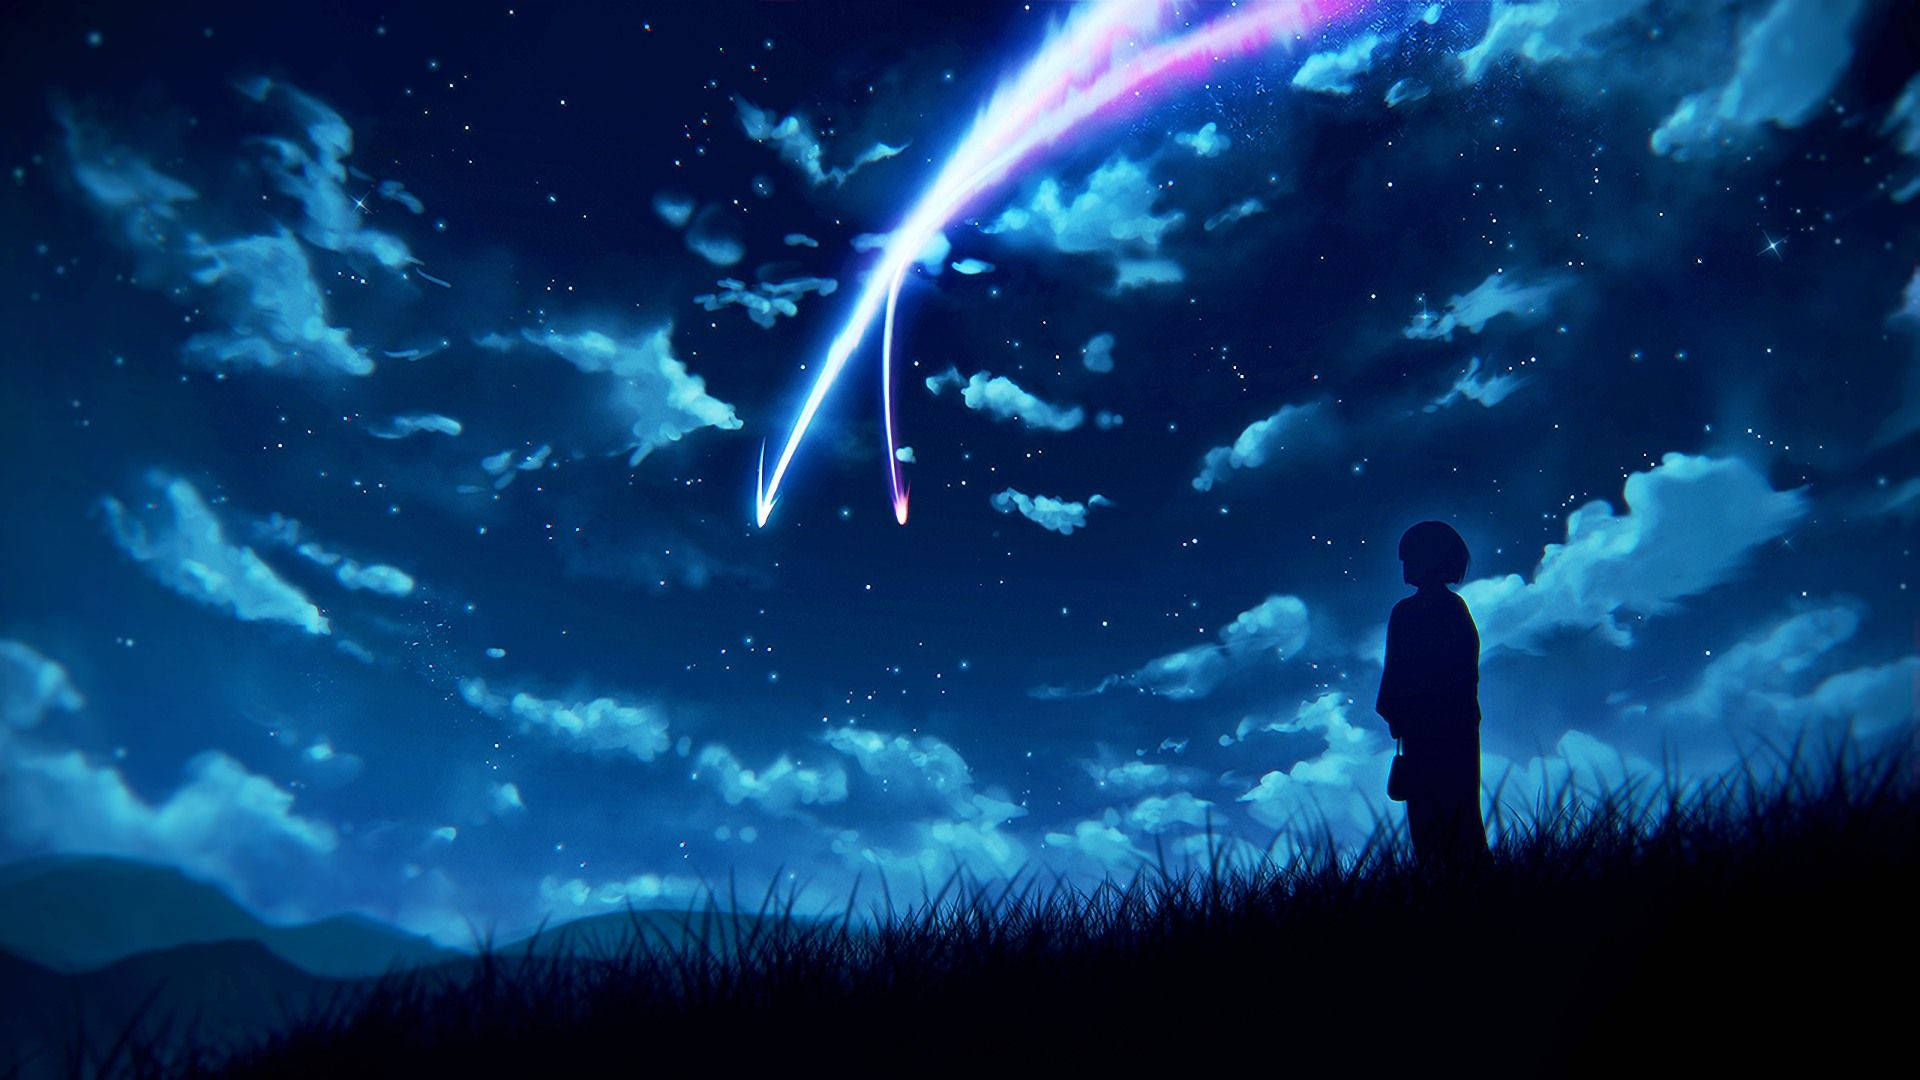 Anime Aesthetic Night Sky